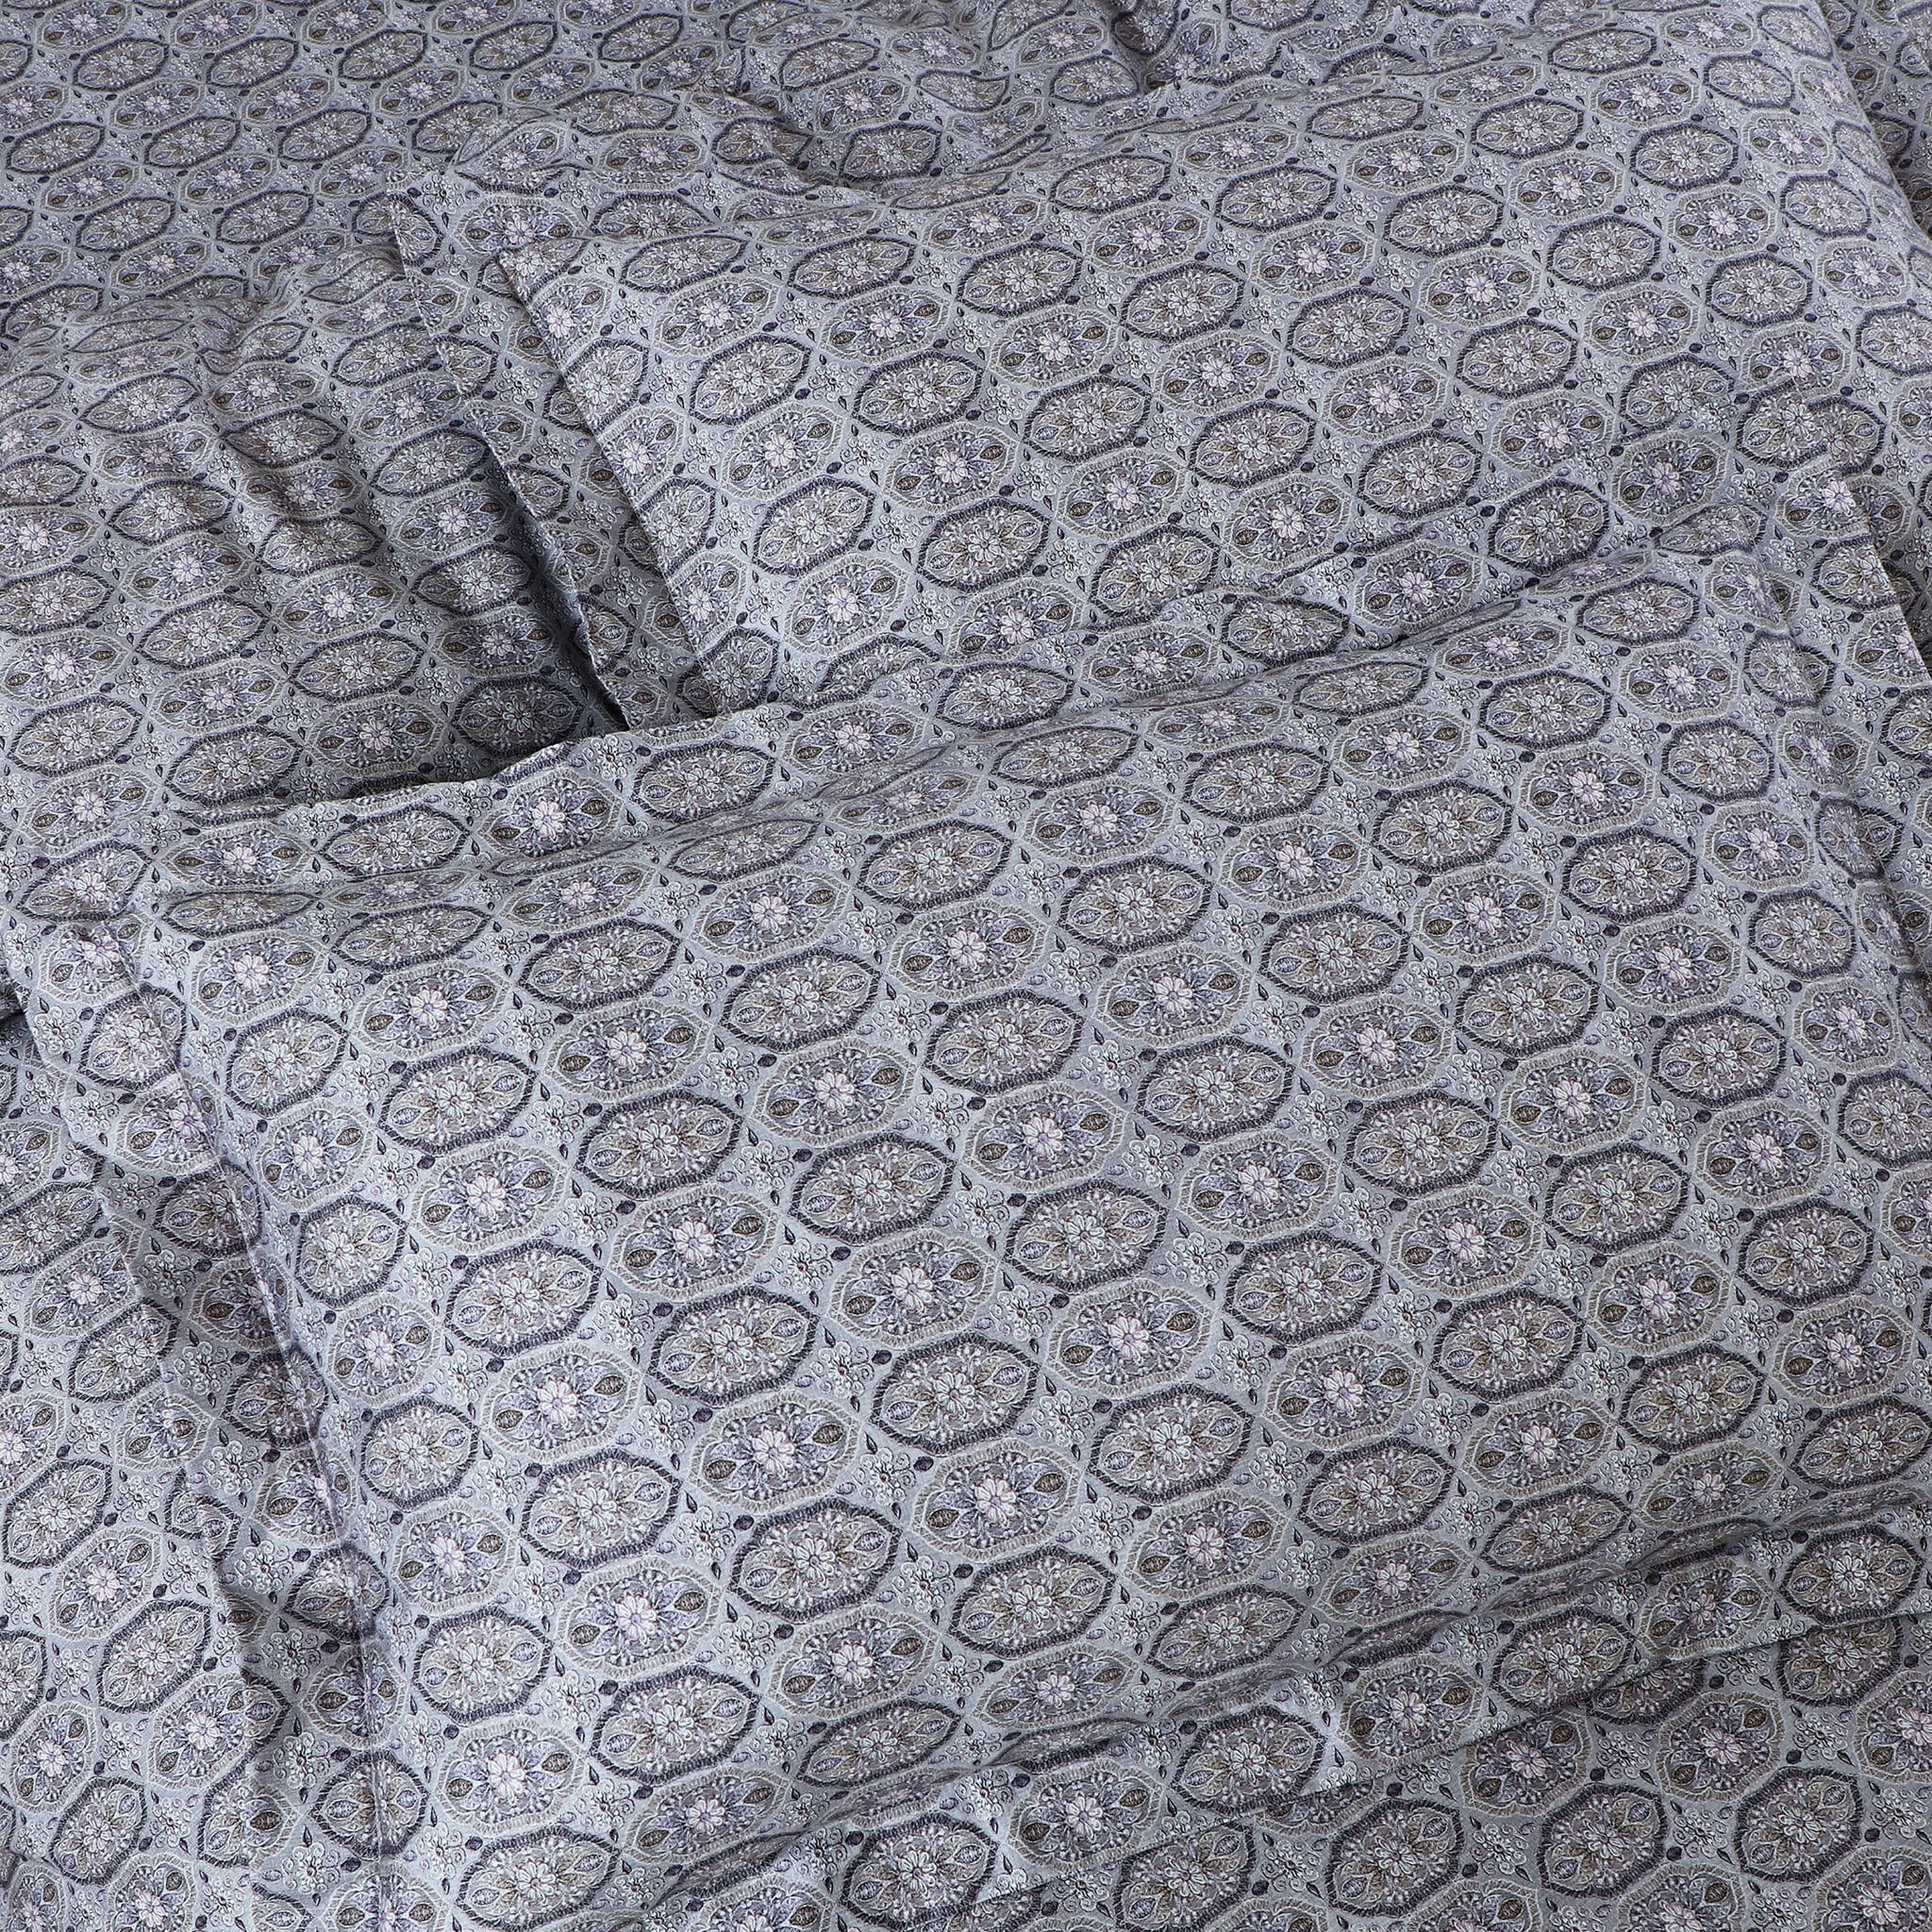 Malako Basel Bedding Set - Grey Abstract 100% Cotton King Size Bedsheet With Comforter